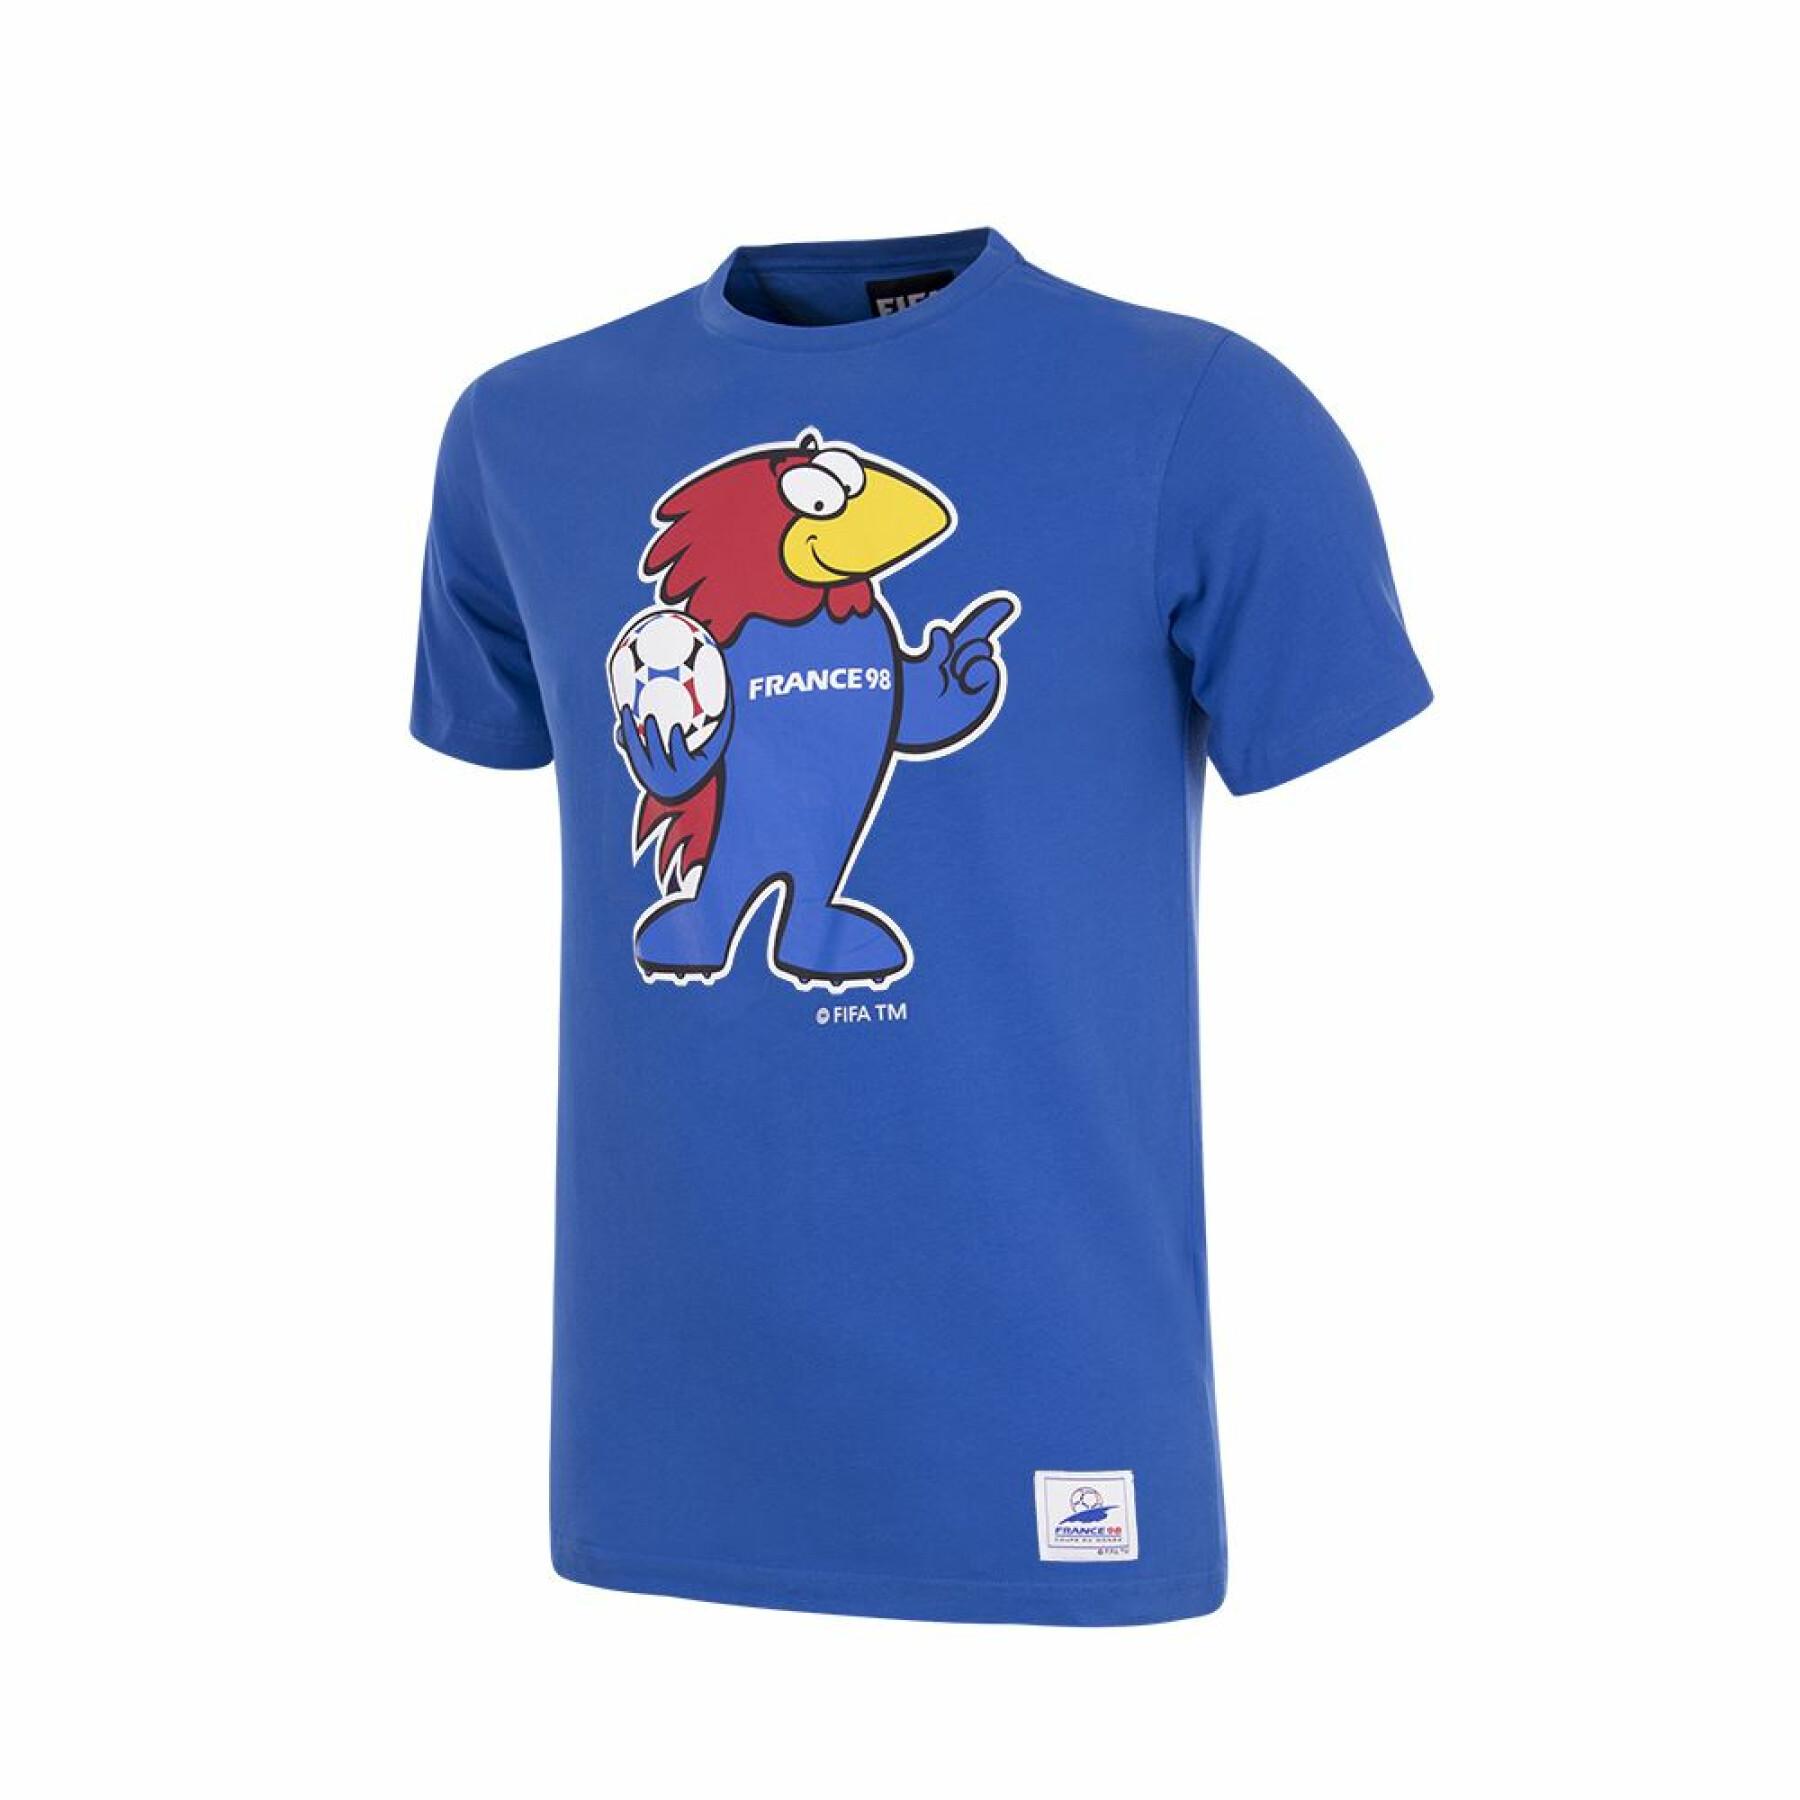 Kinder-T-shirt Copa France World Cup Mascot 1998